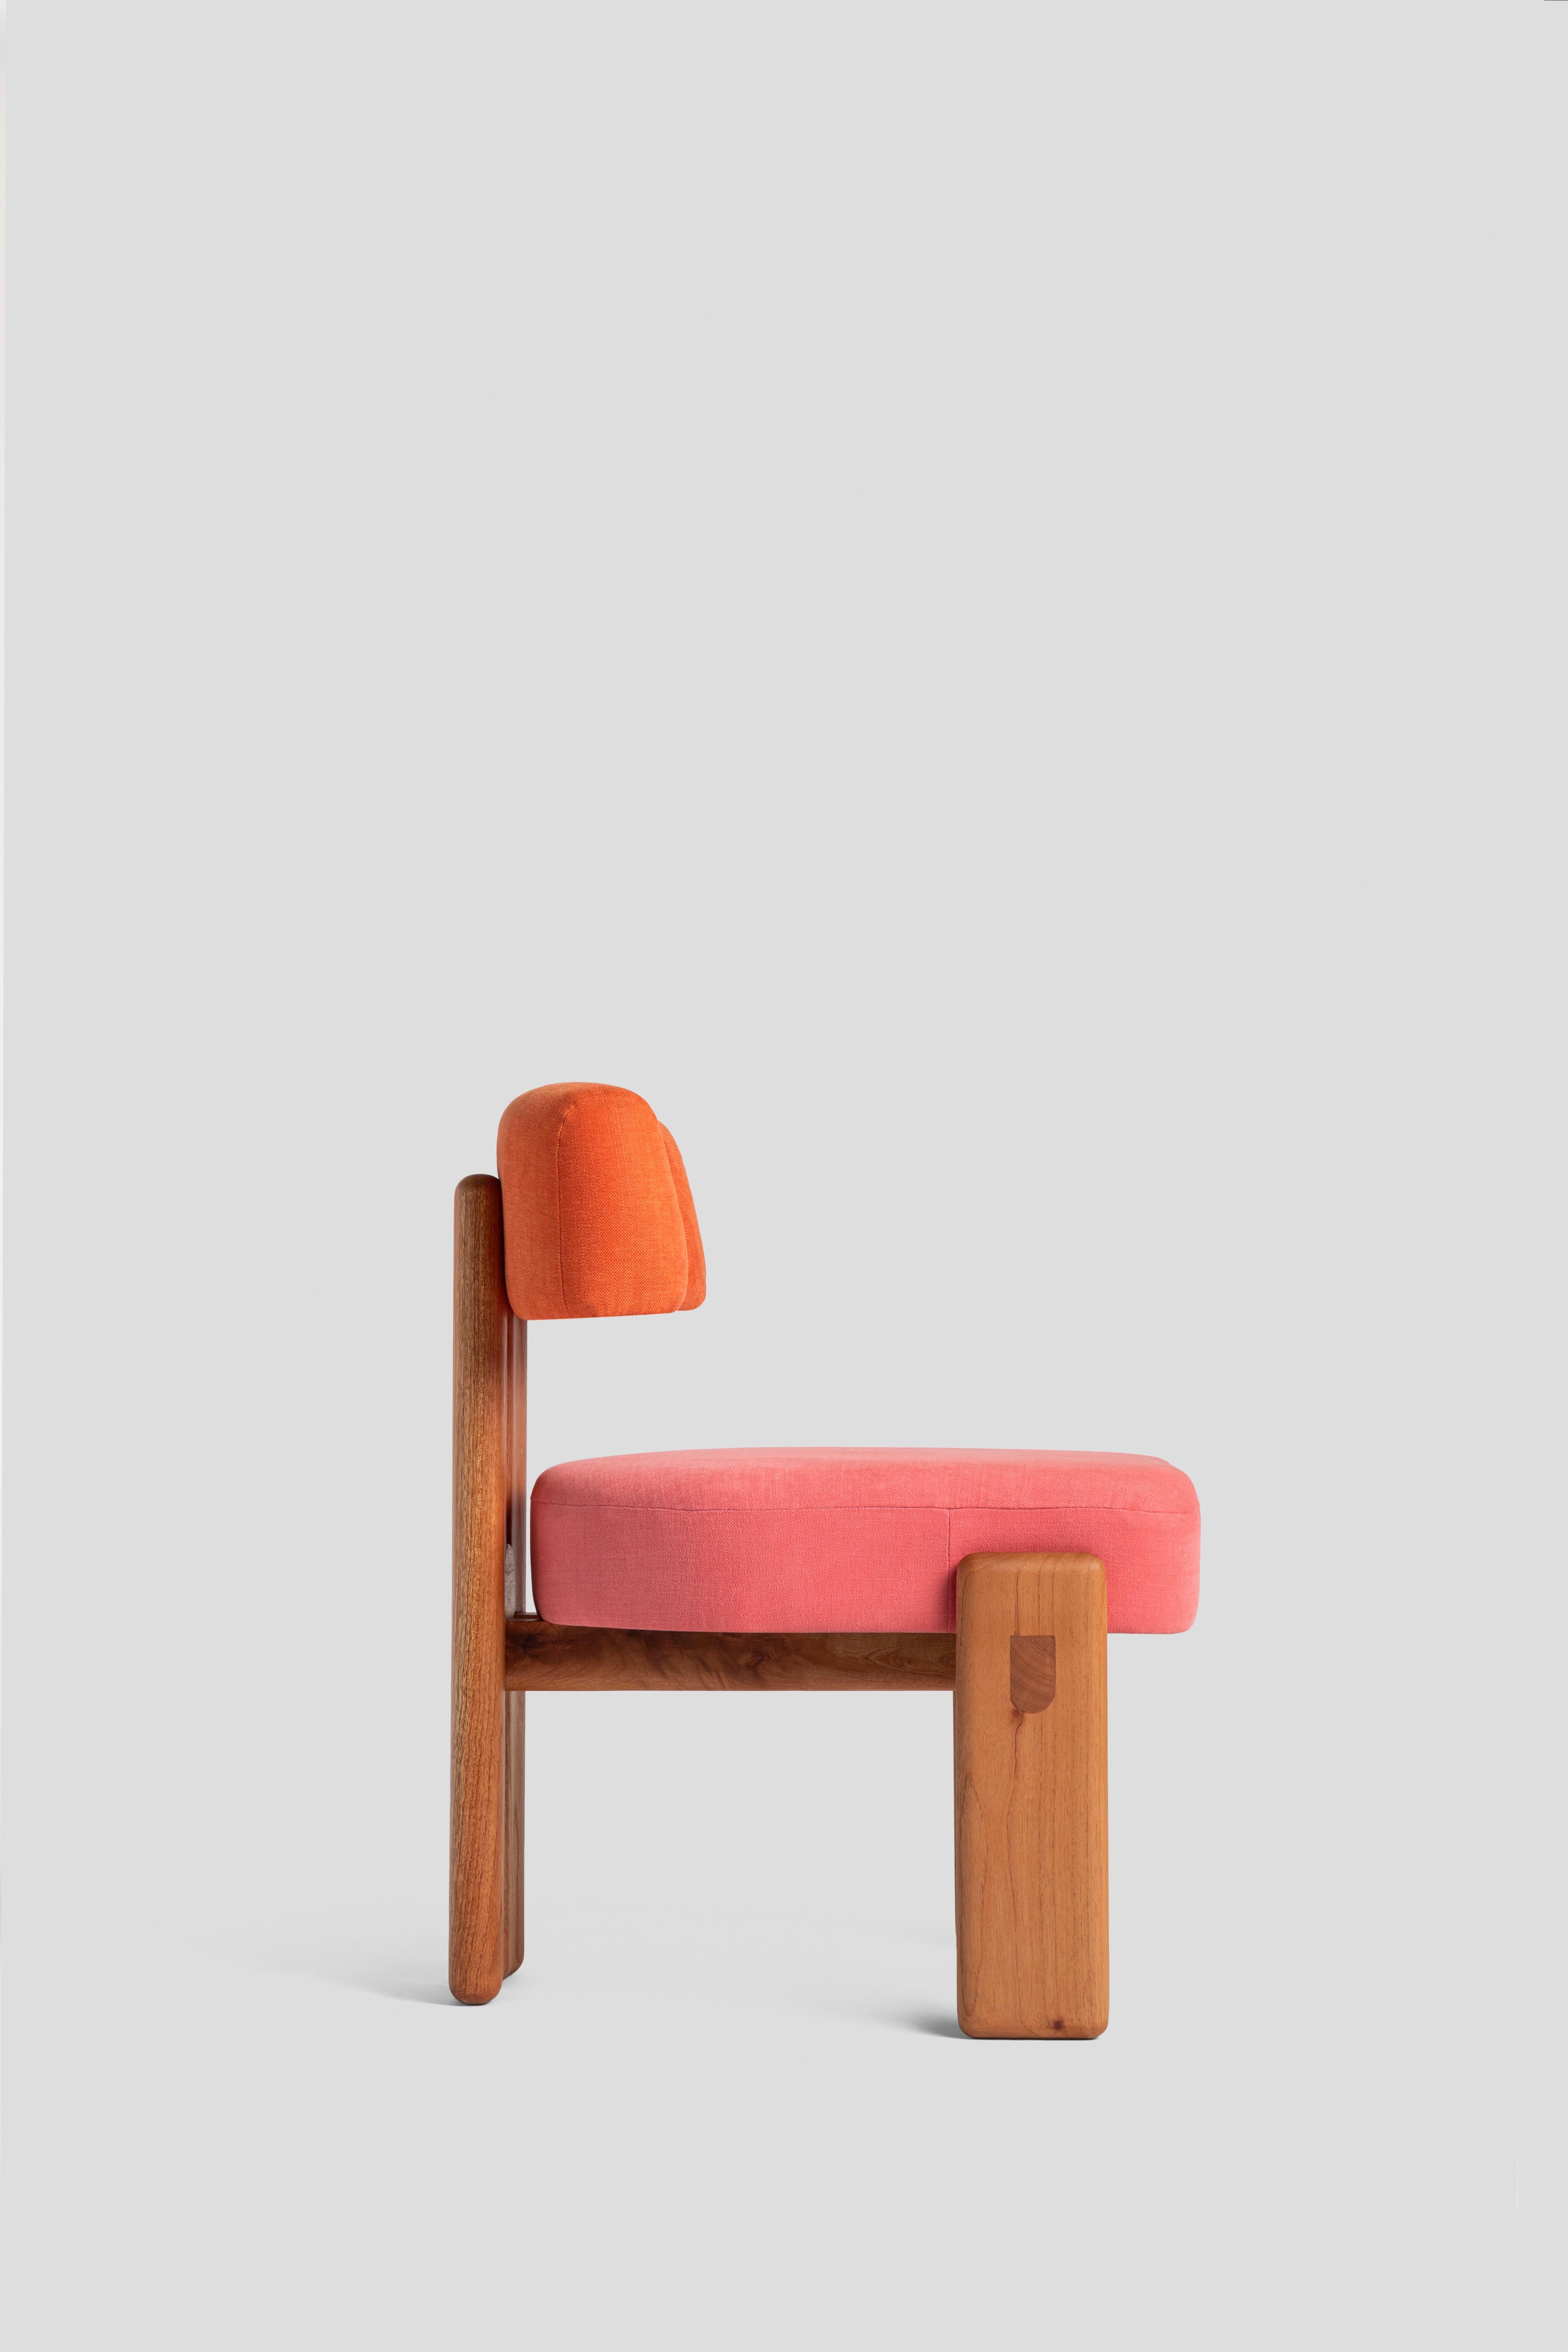 ANNI Toronja De la Paz Low Chair Limited Edition  Contemporary Mexican Design For Sale 6